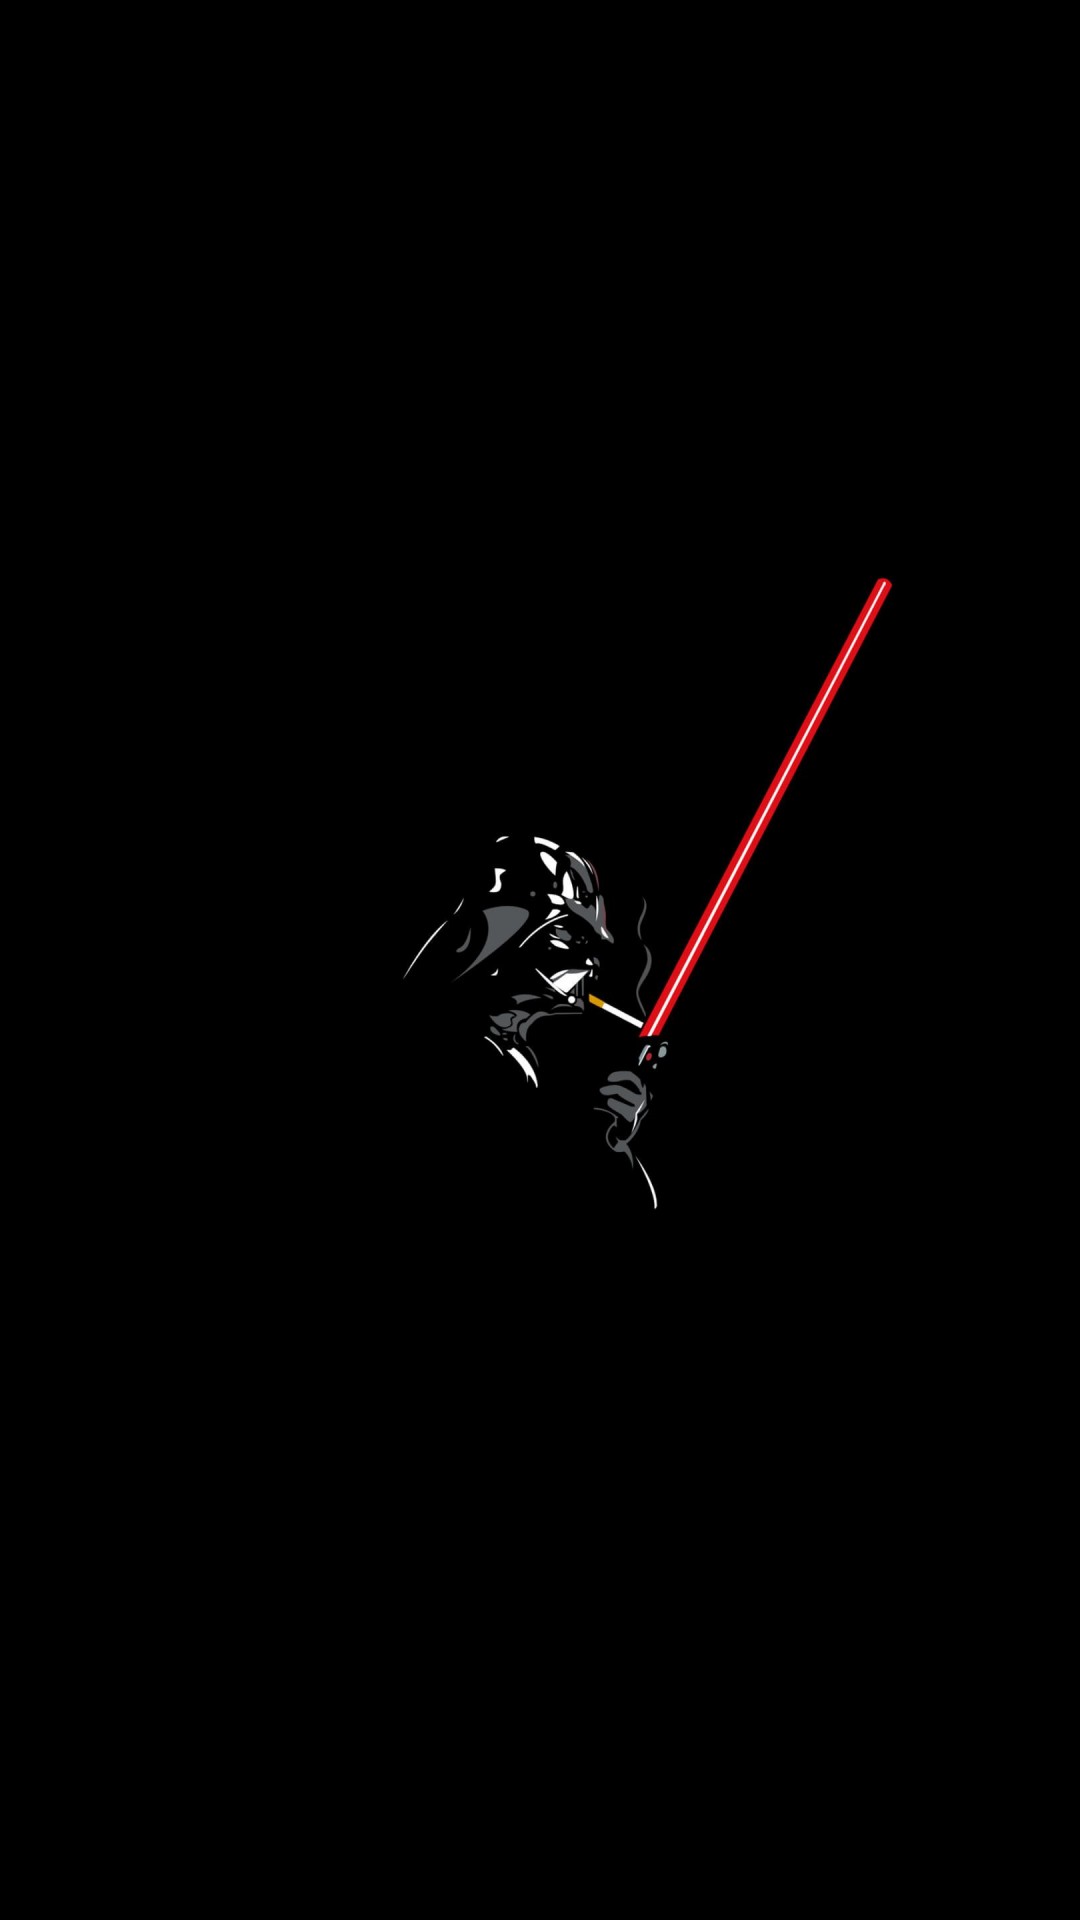 Darth Vader Lighting a Cigarette Wallpaper for Google Nexus 5X